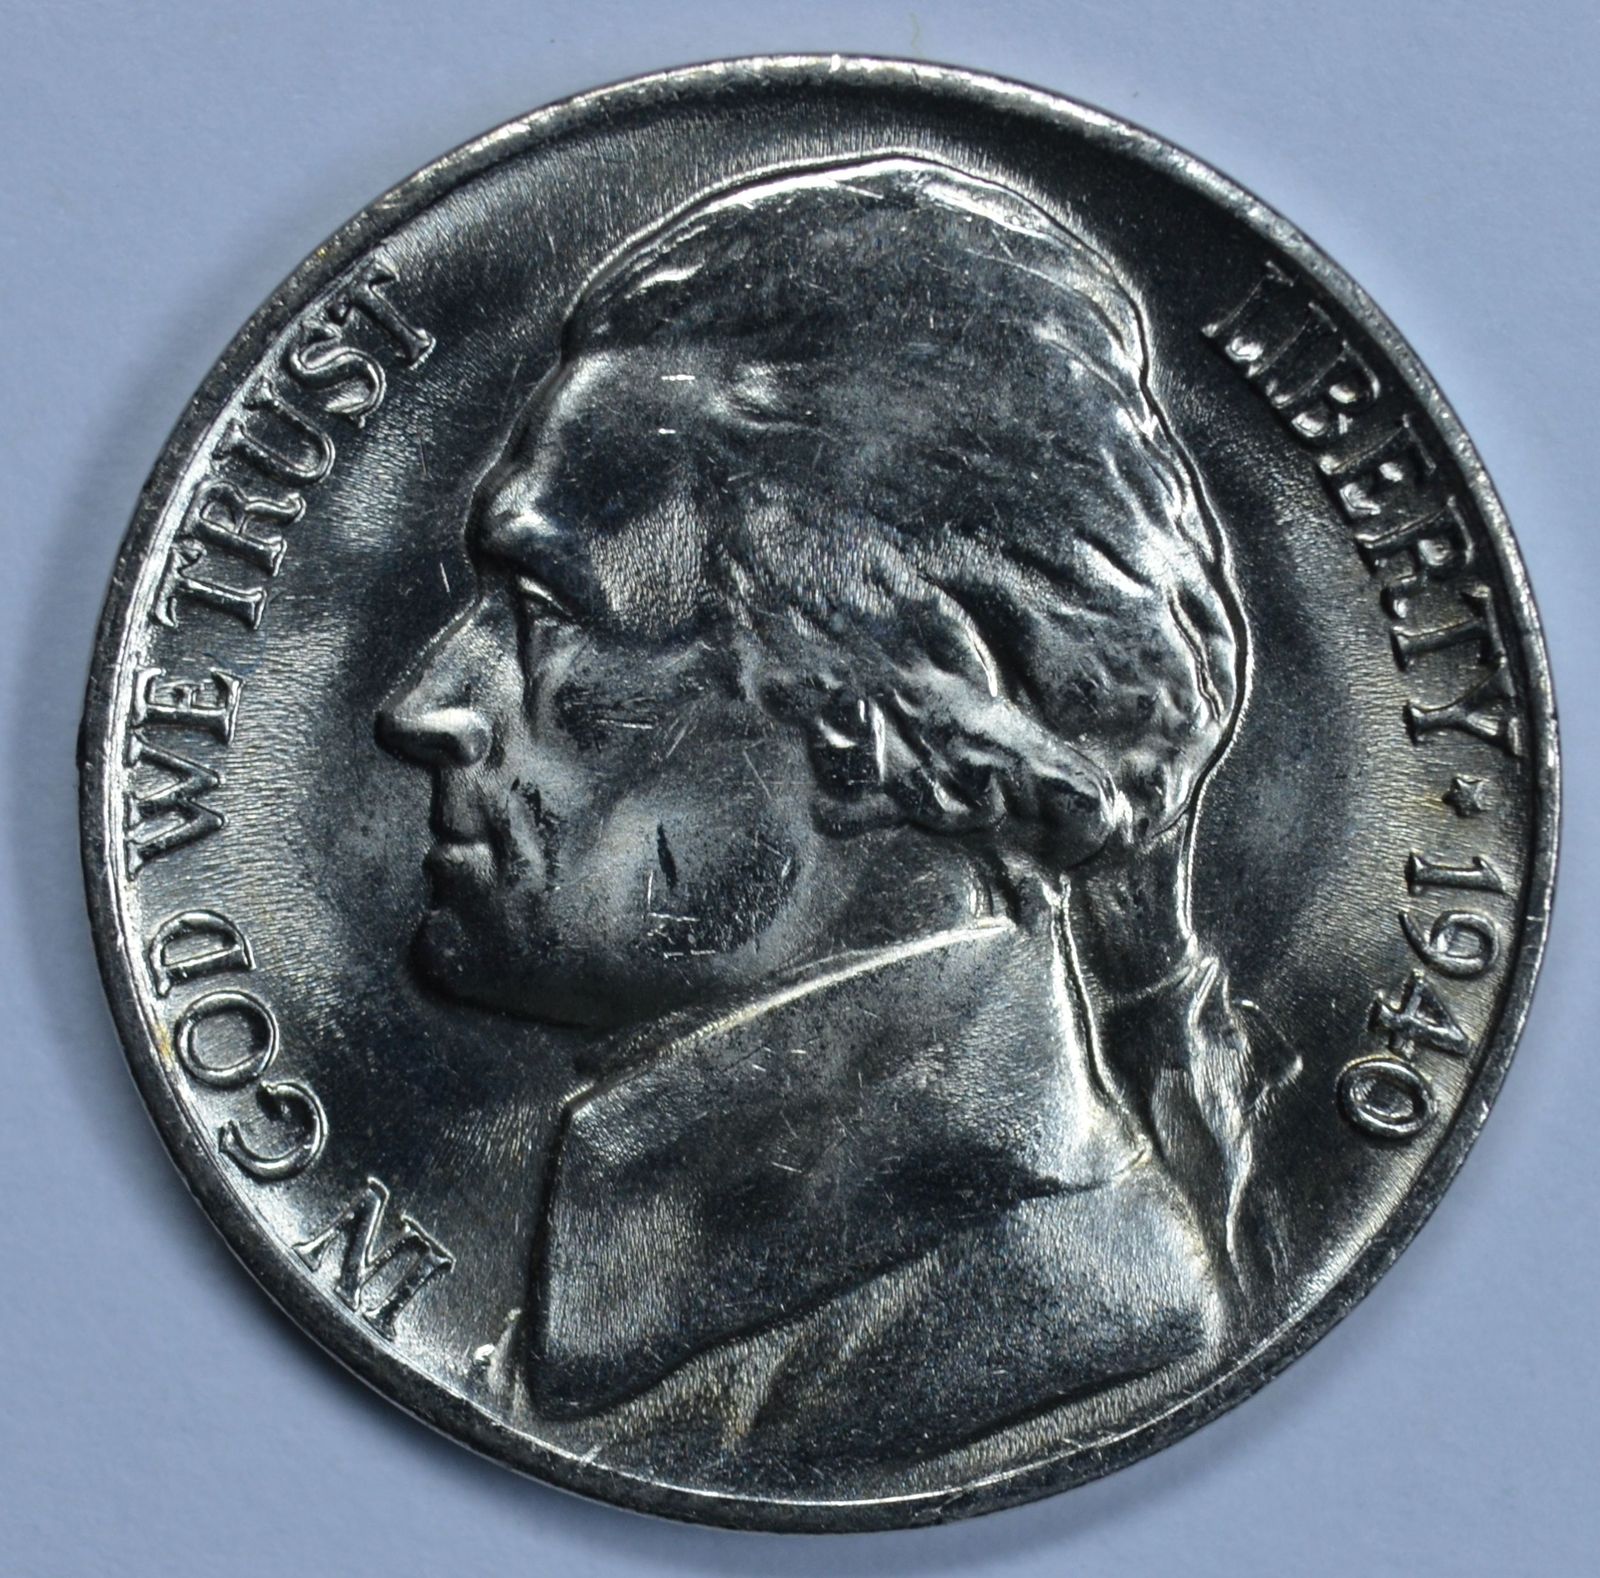 1940 P Jefferson uncirculated nickel BU 5 full steps - $11.50